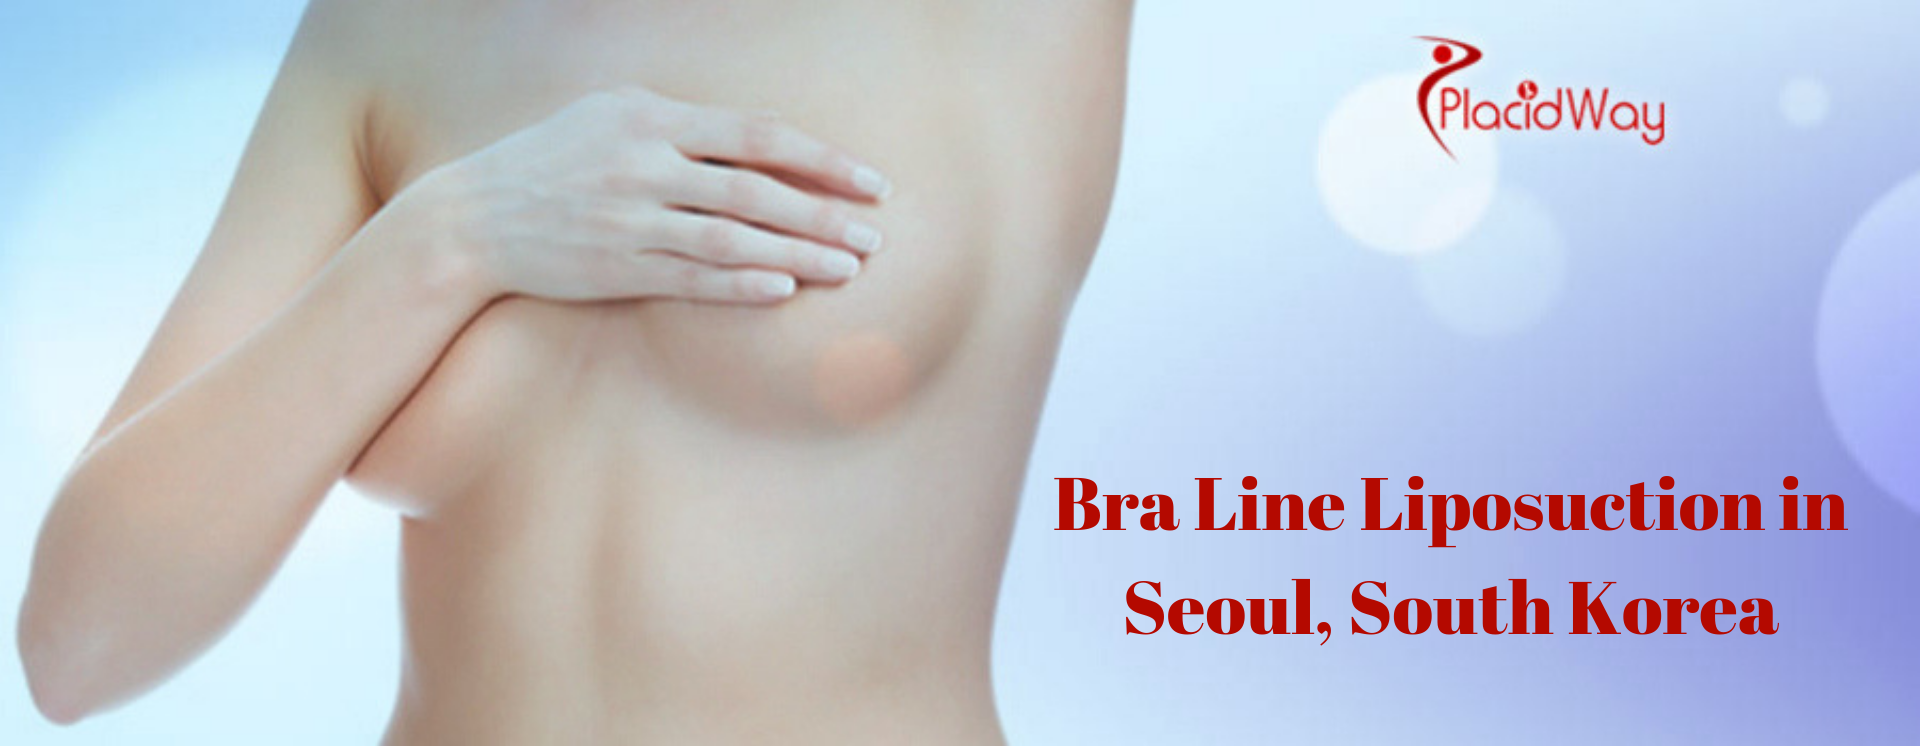 Bra Line Liposuction in Seoul, South Korea